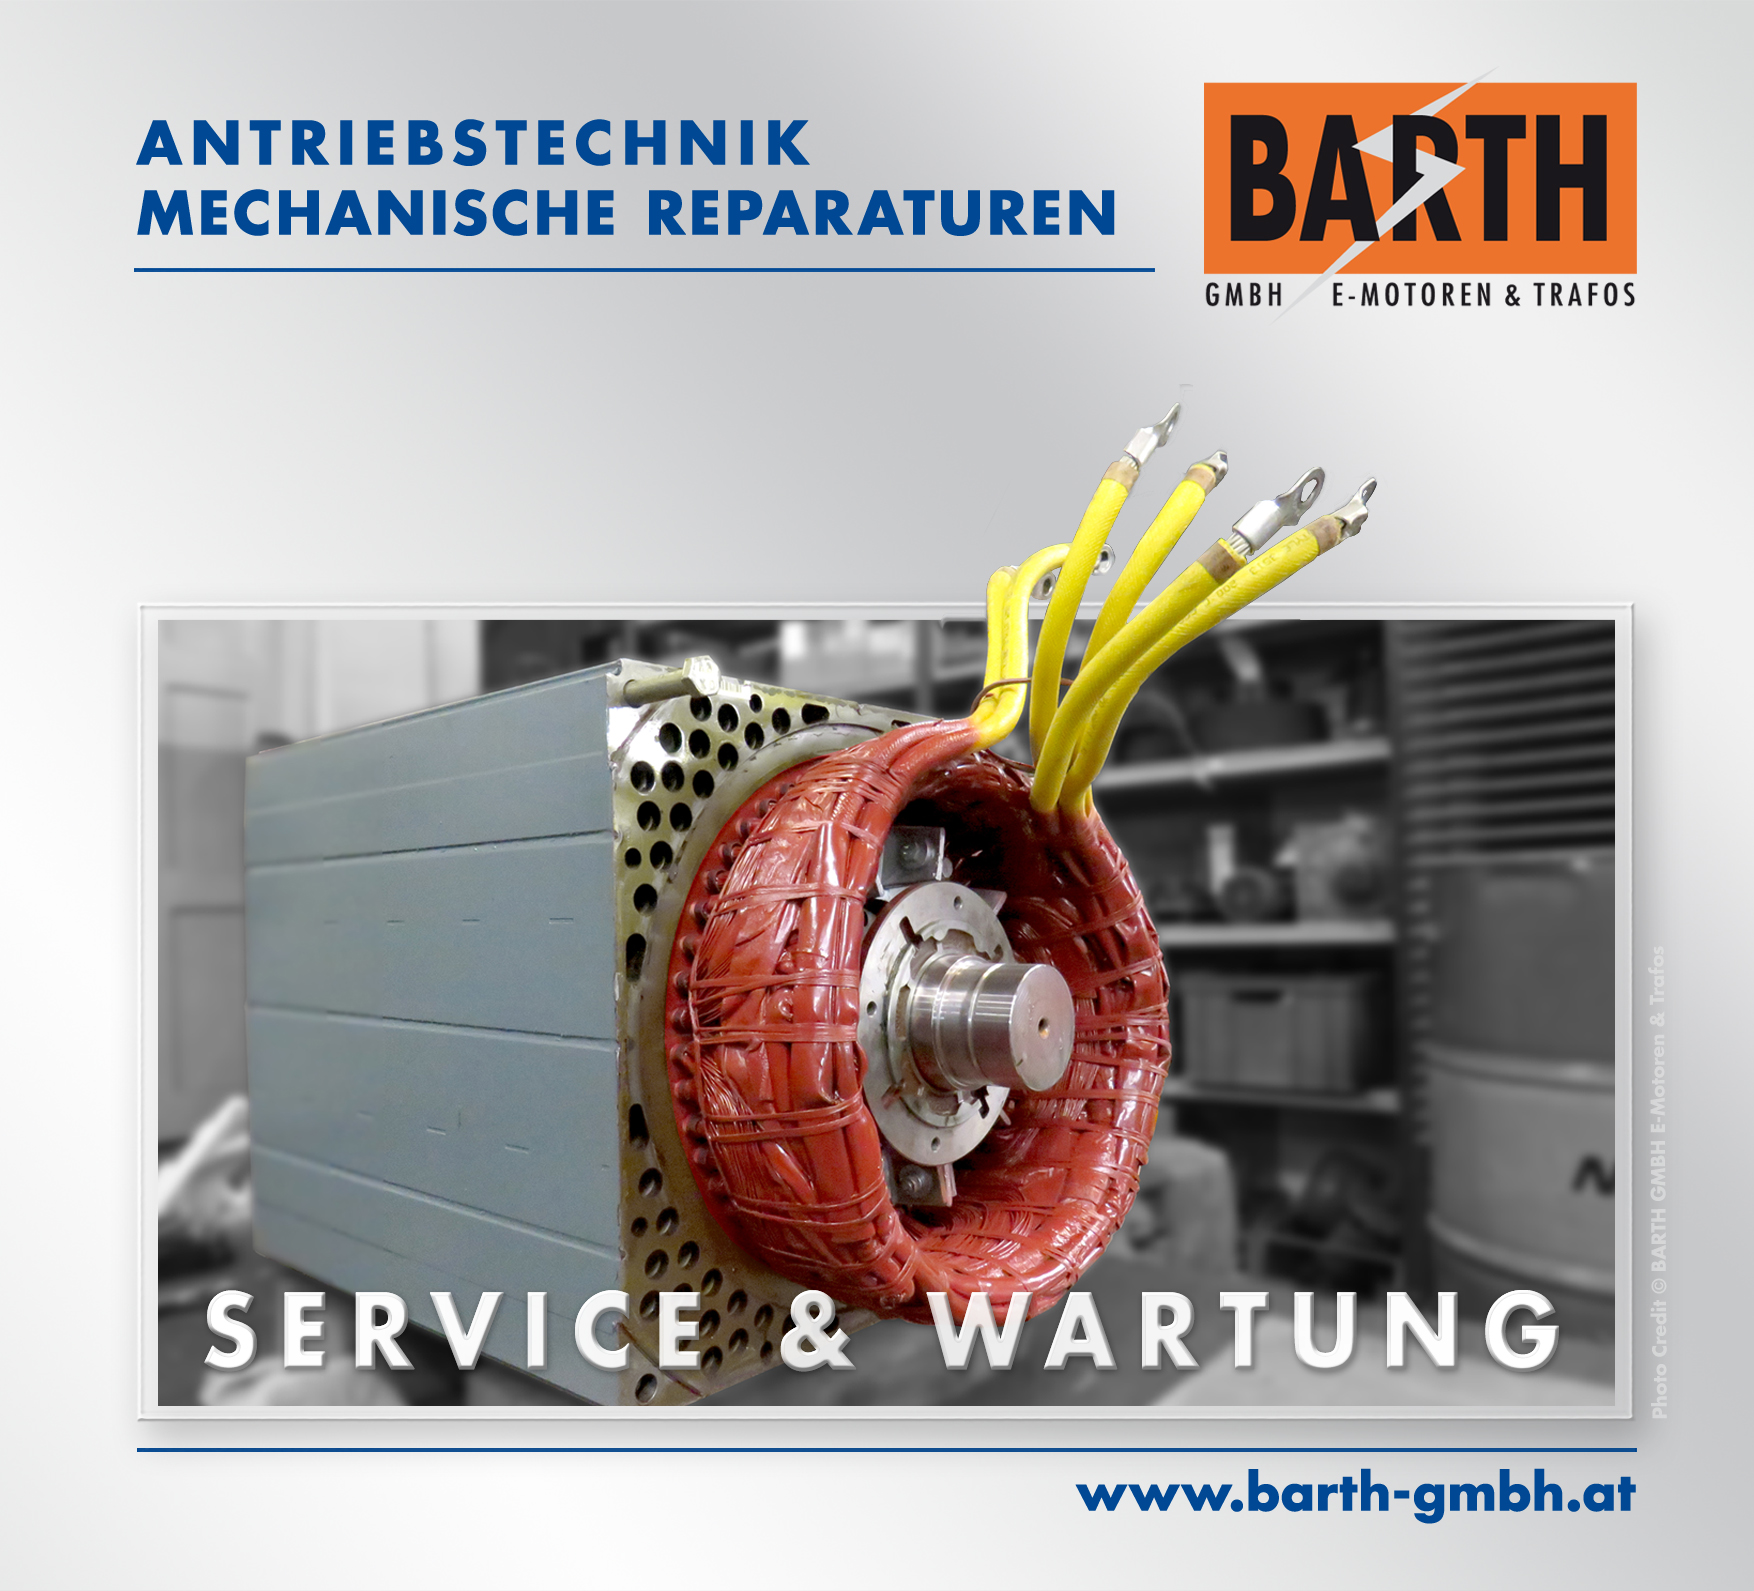 Abb.: Mechanische Reparaturen, Service & Wartung